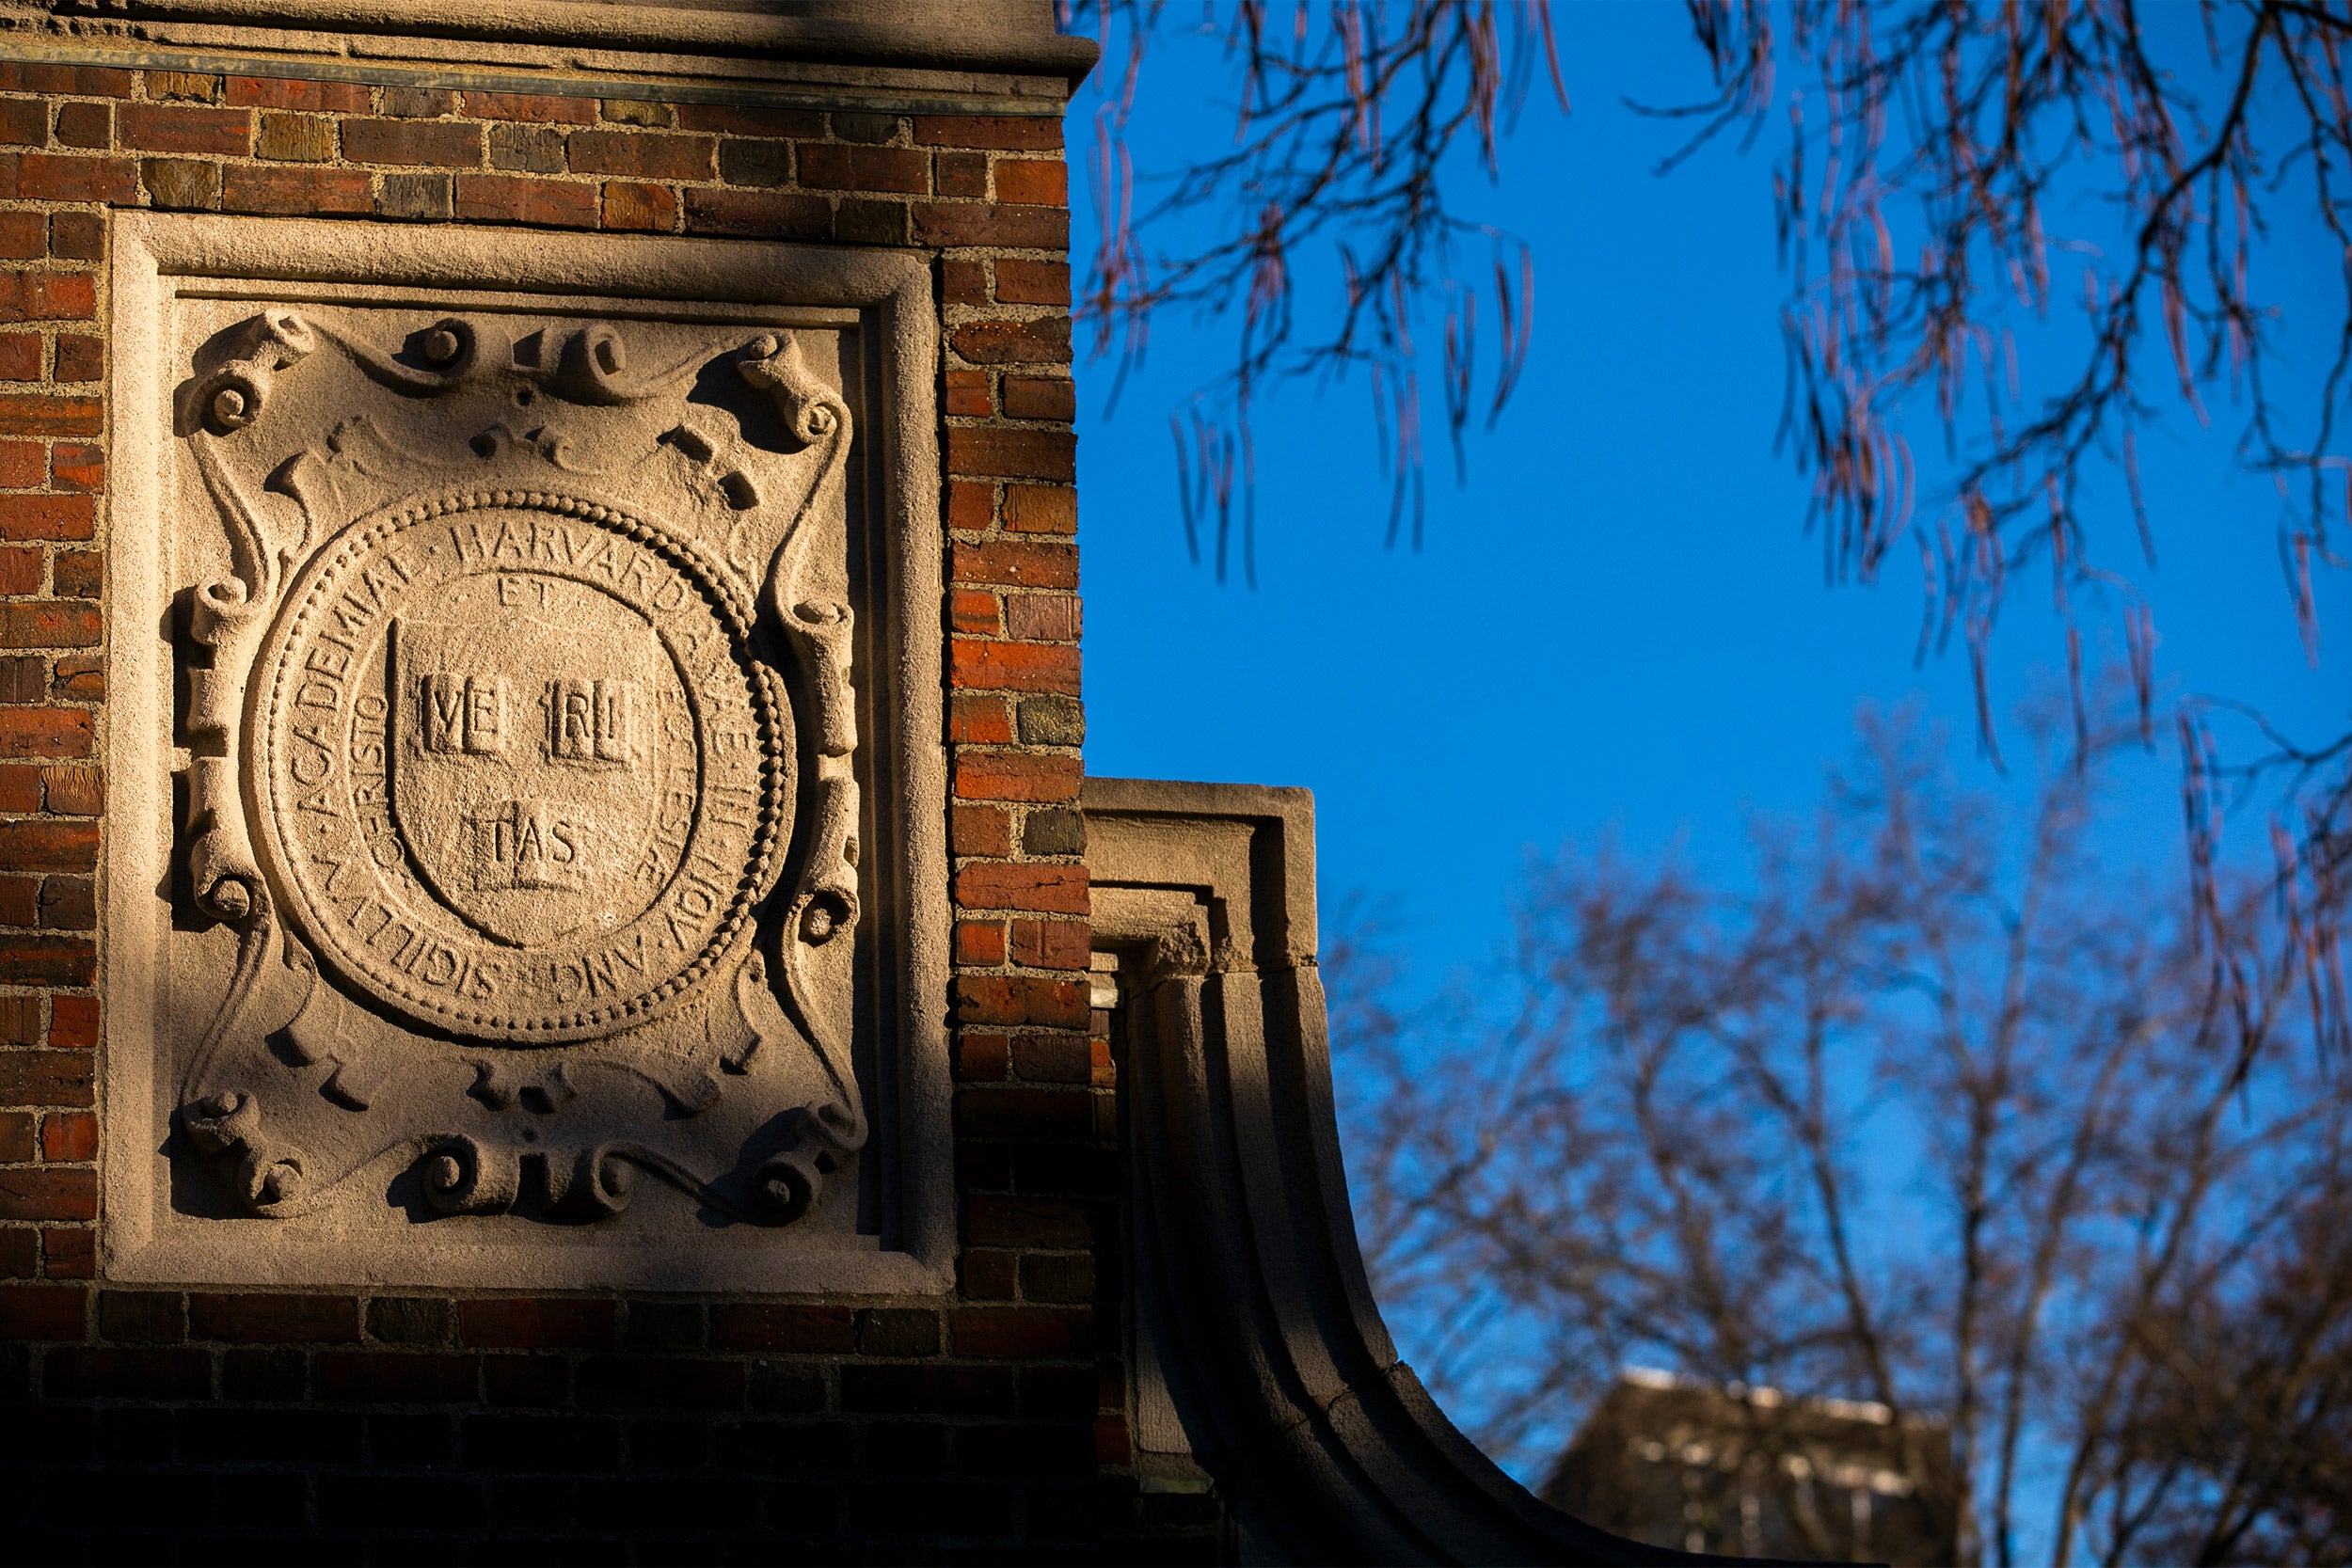 A Harvard gate featuring the veritas shield.